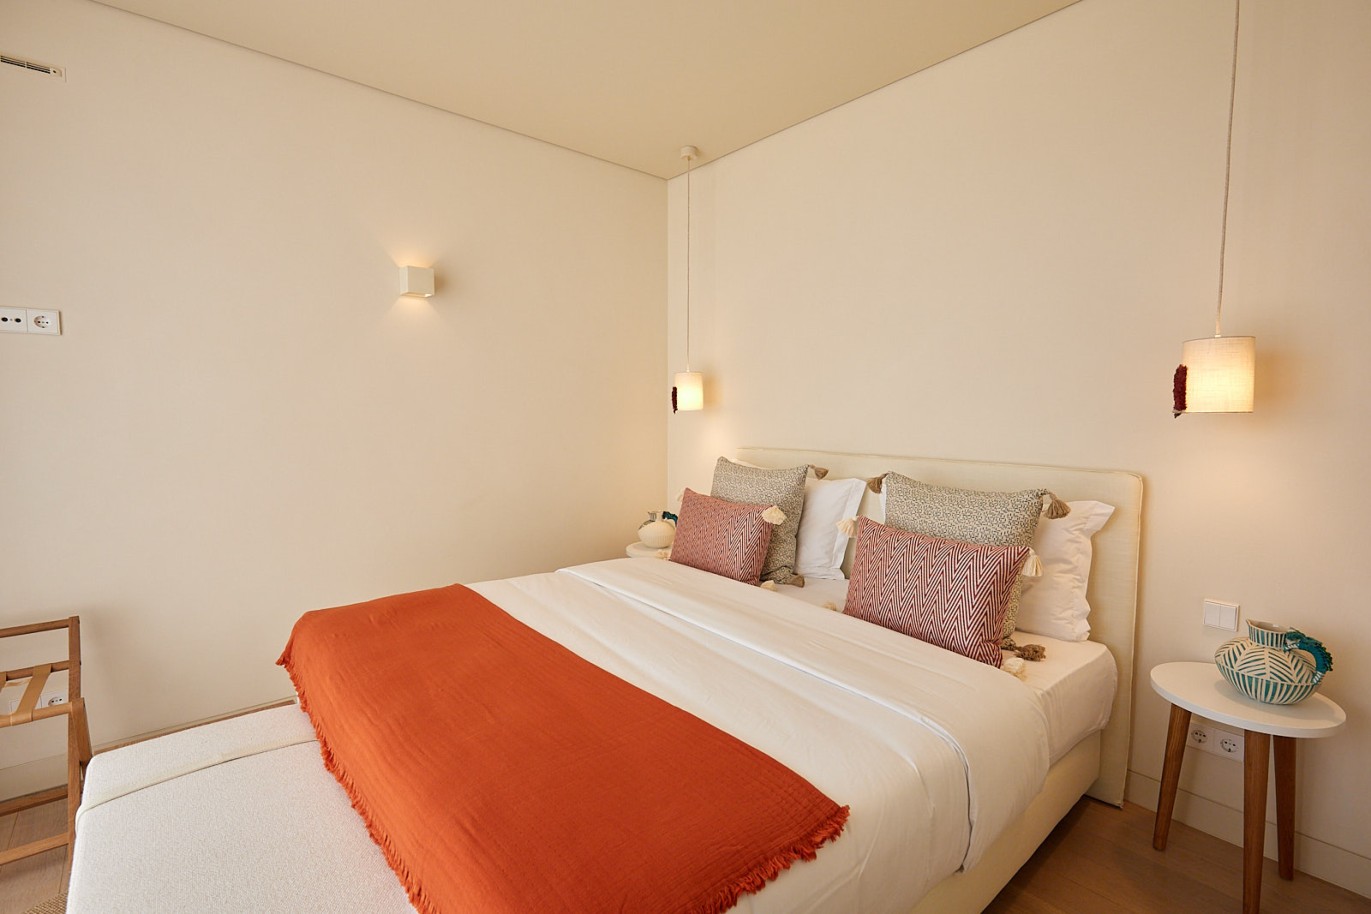 2 bedroom apartment in resort, for sale in Porches, Algarve_229095